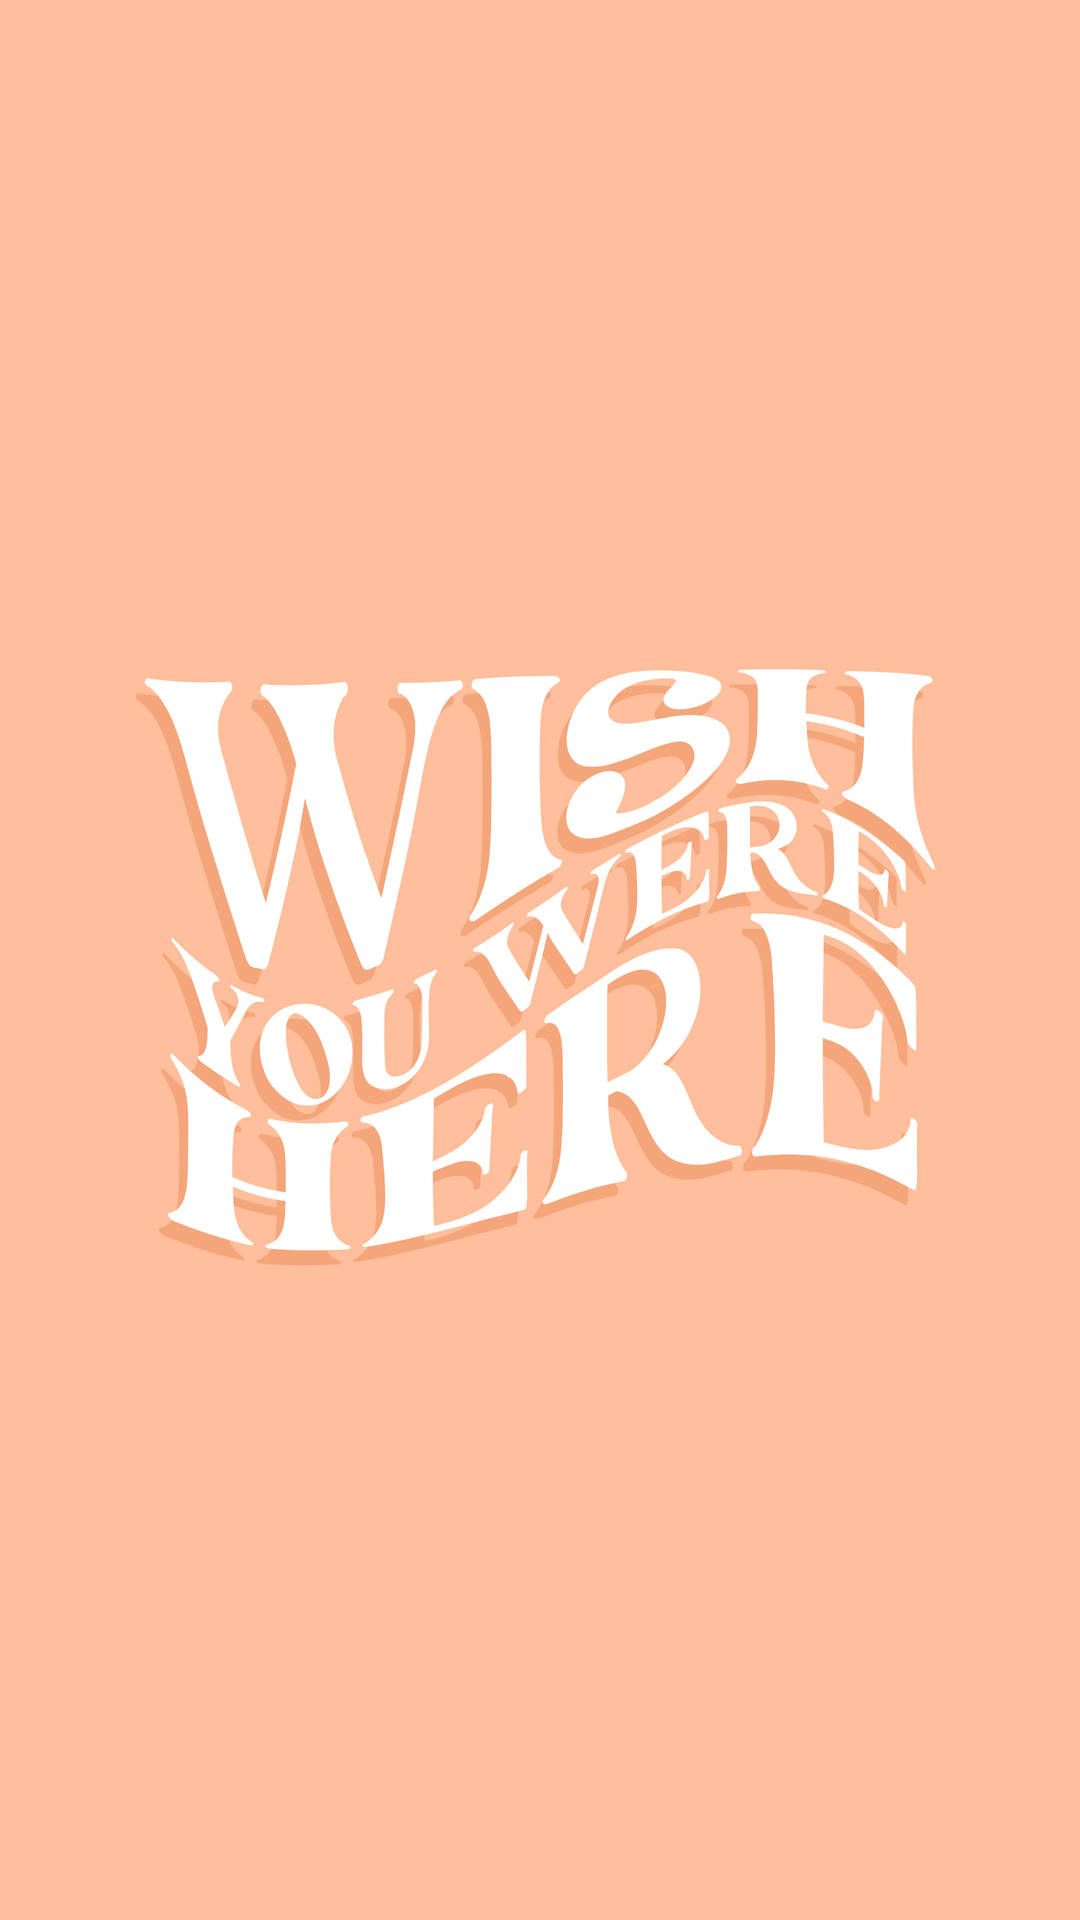 Wish You Were Here Pastel Minimalist Wallpaper